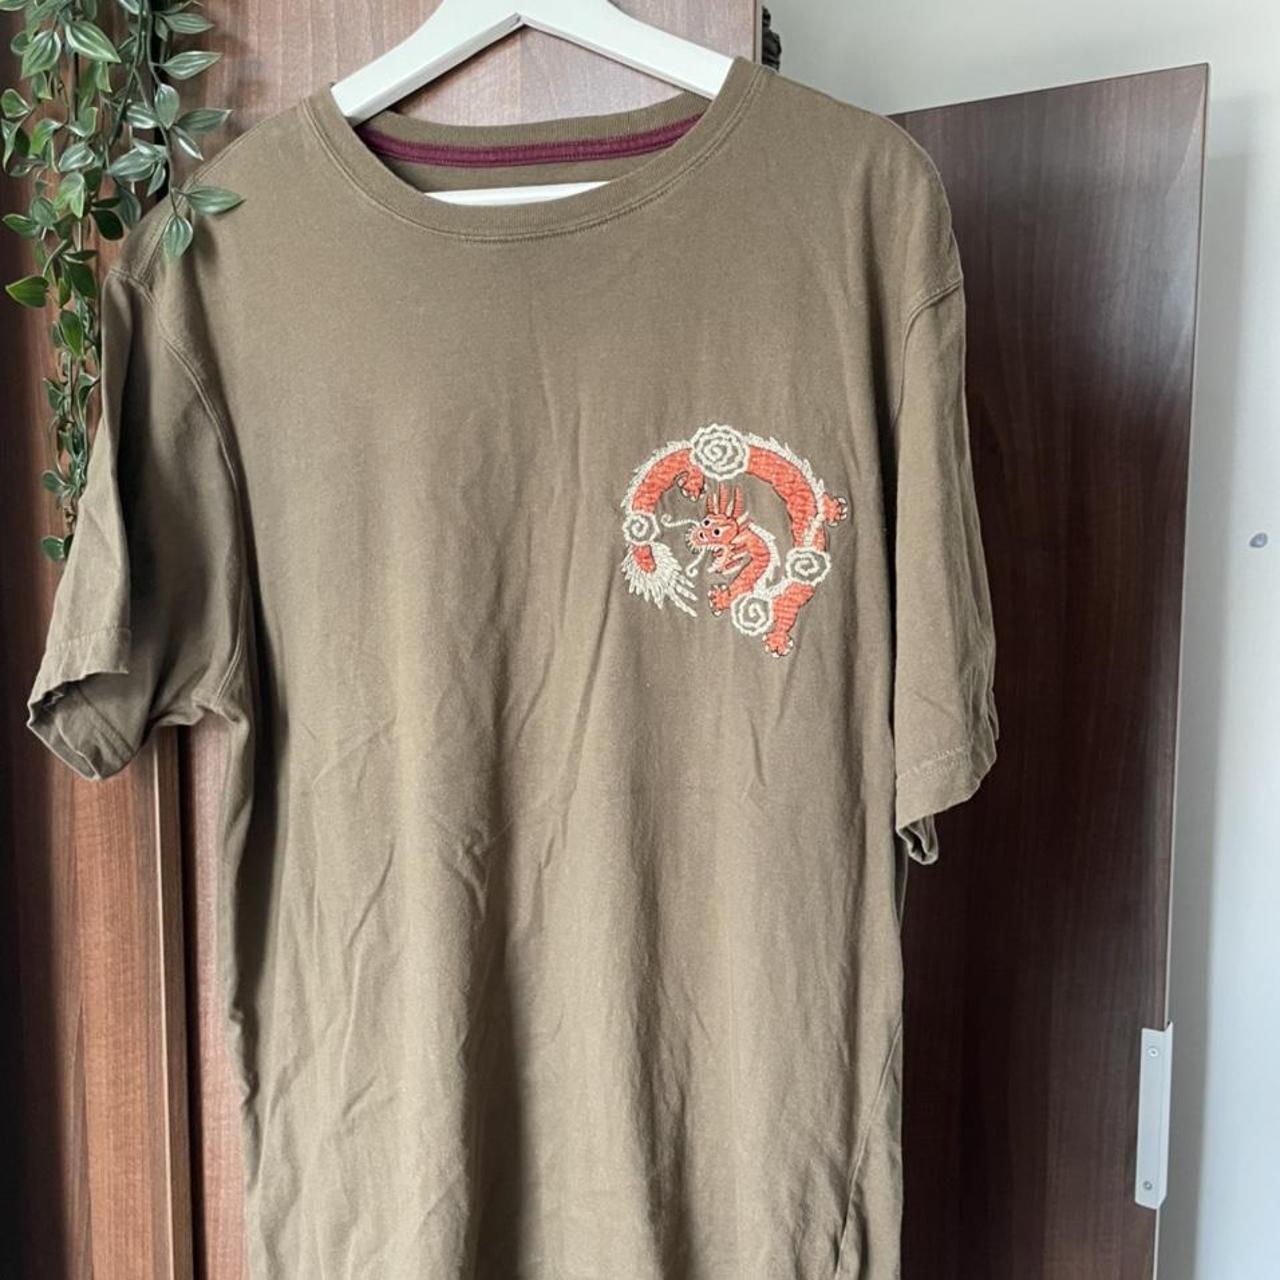 Olive Maharishi embroidered dragon t shirt size L.... - Depop